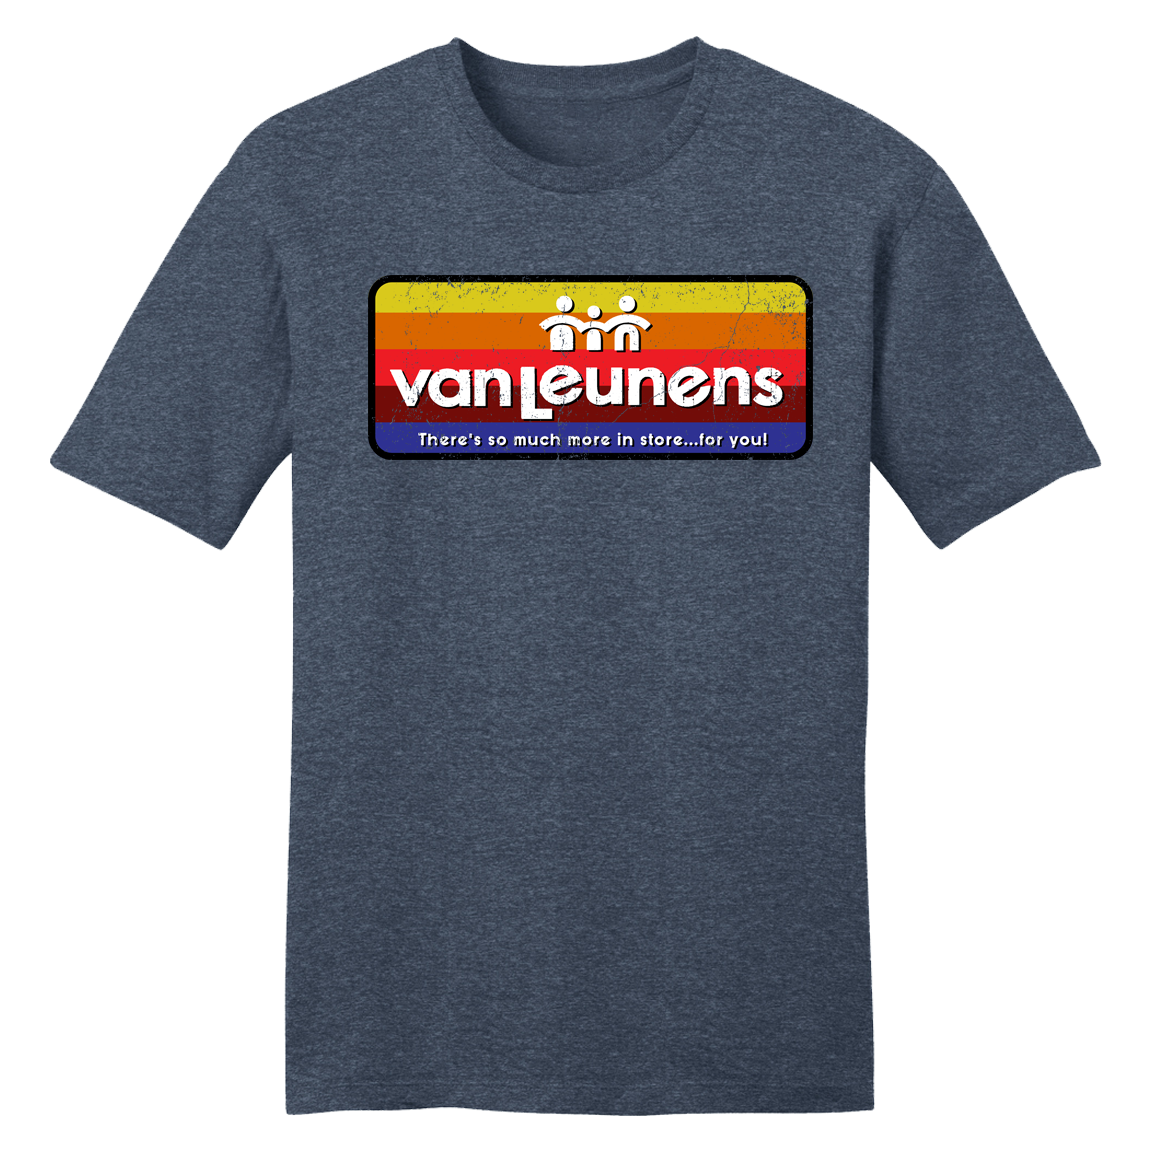 Van Leunens Full Color Logo - Cincy Shirts